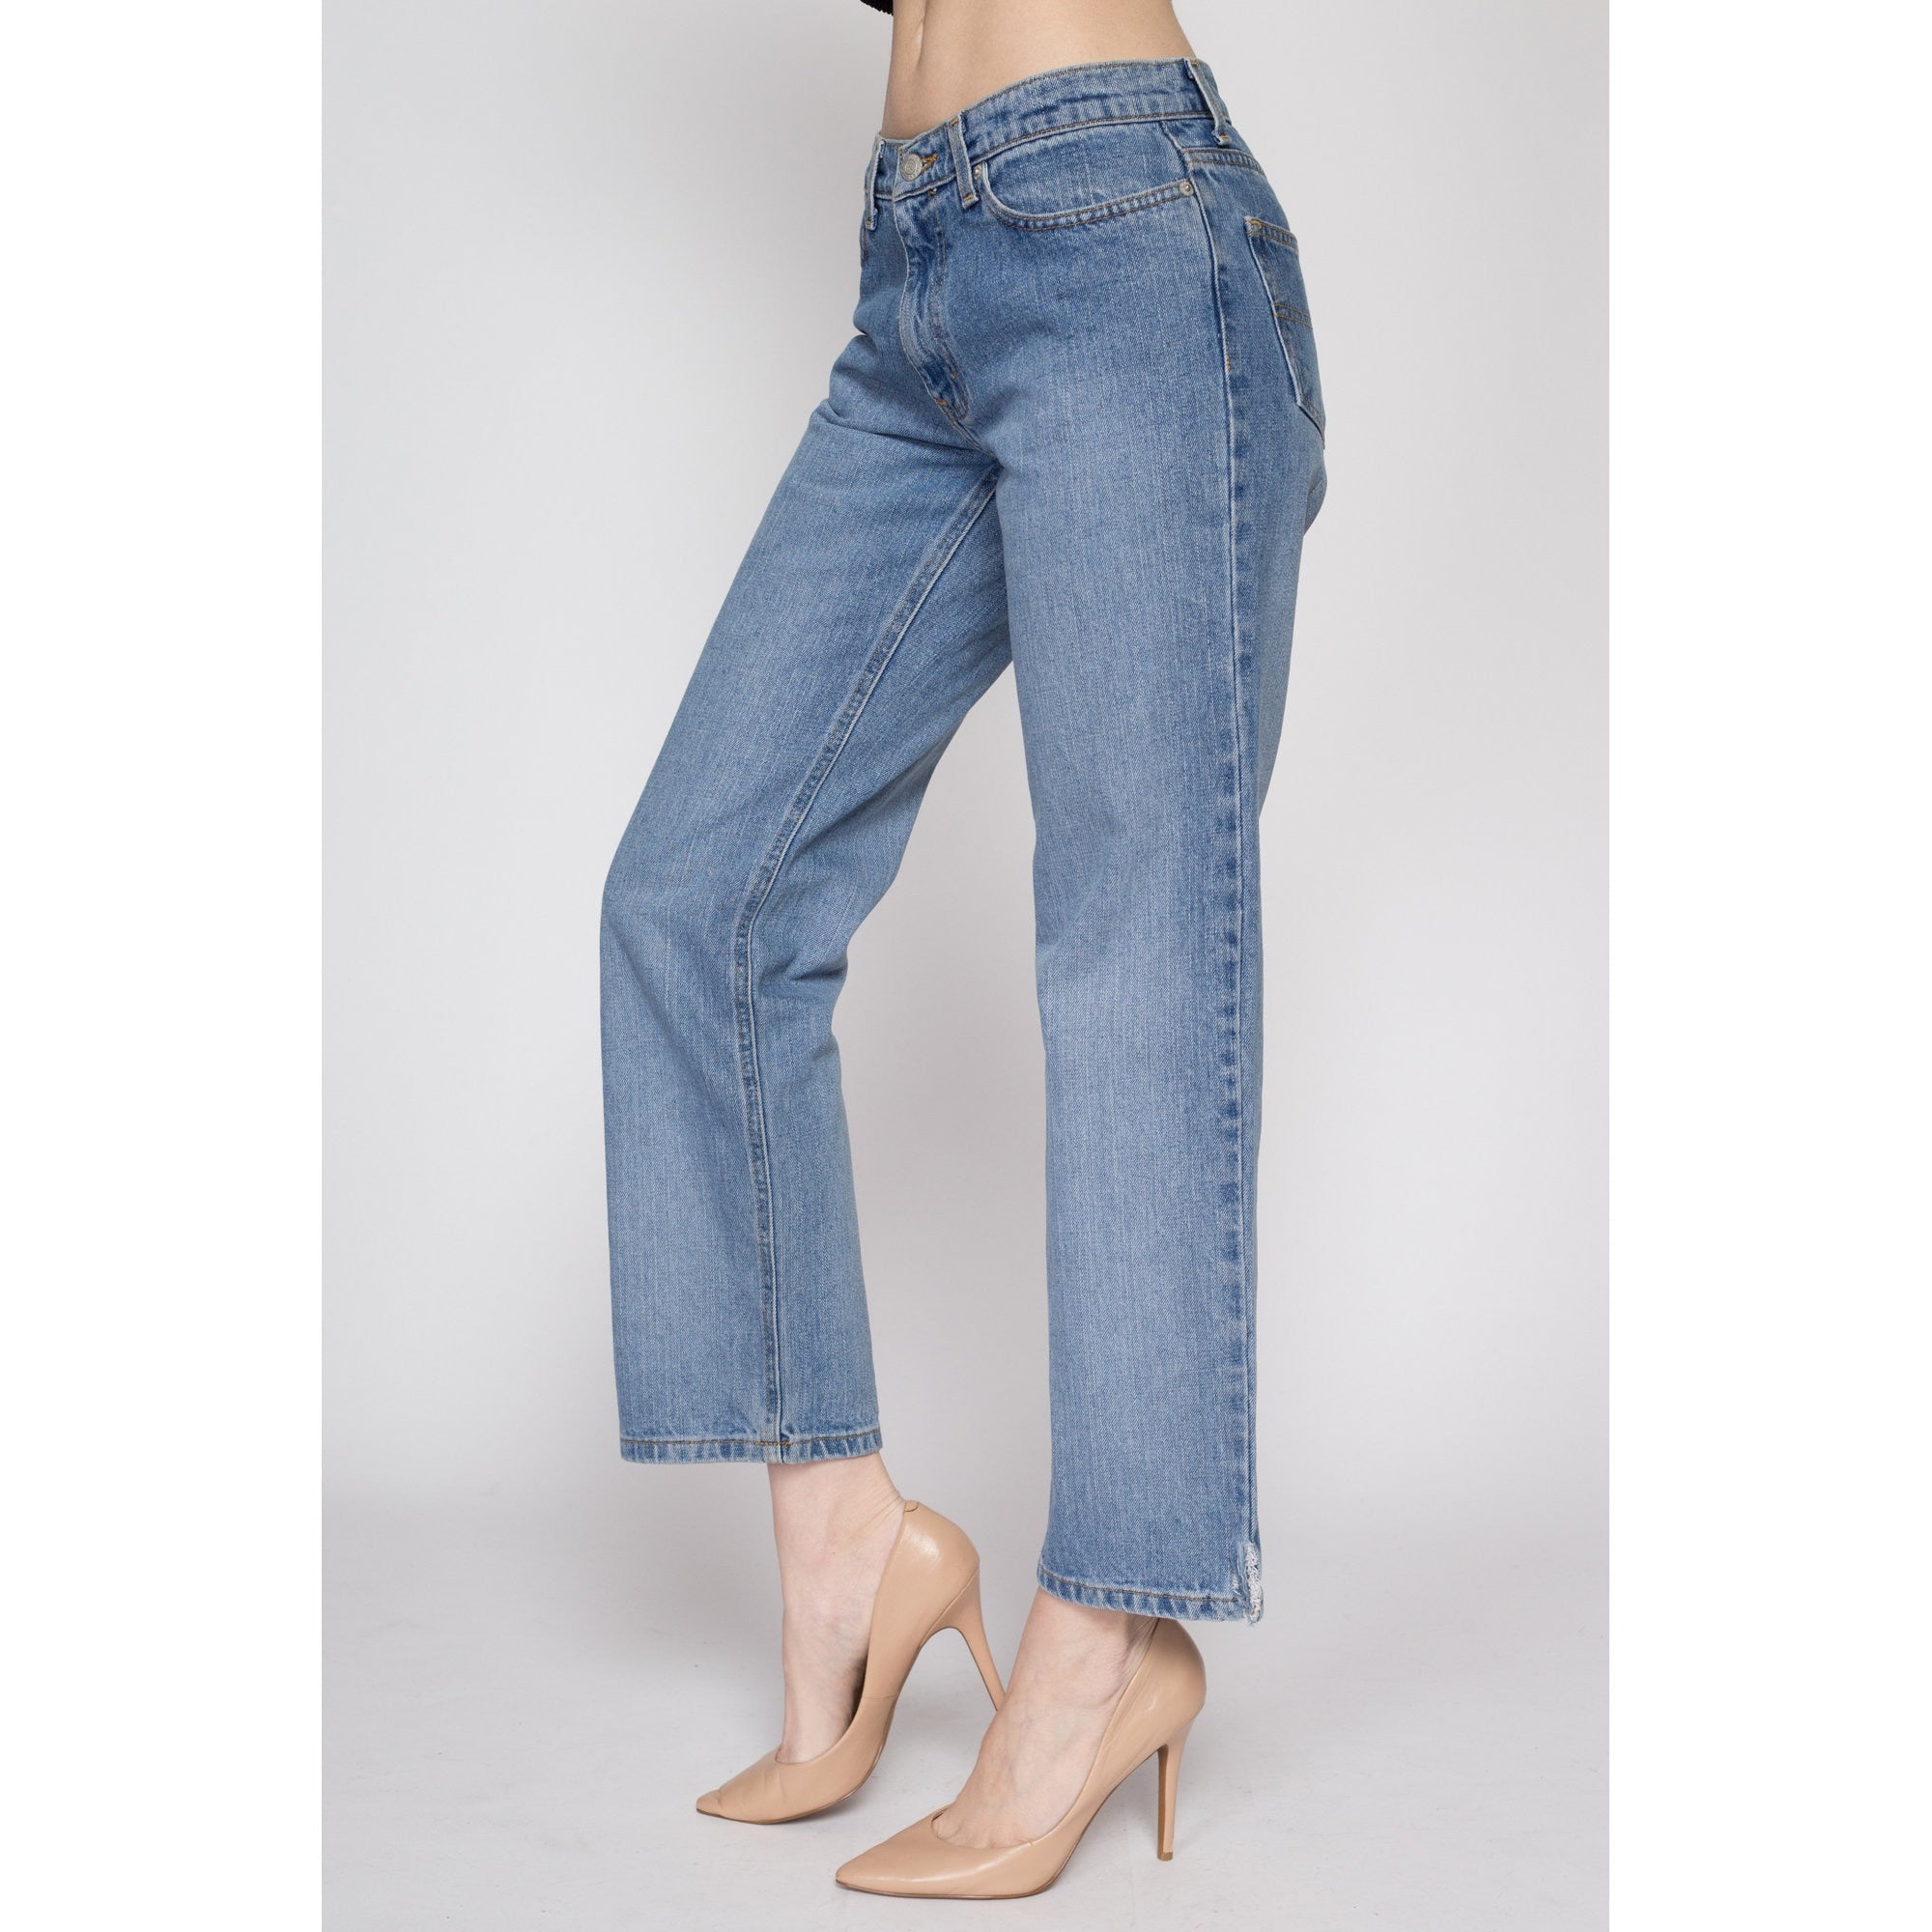 Women Vintage Mid Waist Jeans Wide Leg Loose Boyfriend Denim